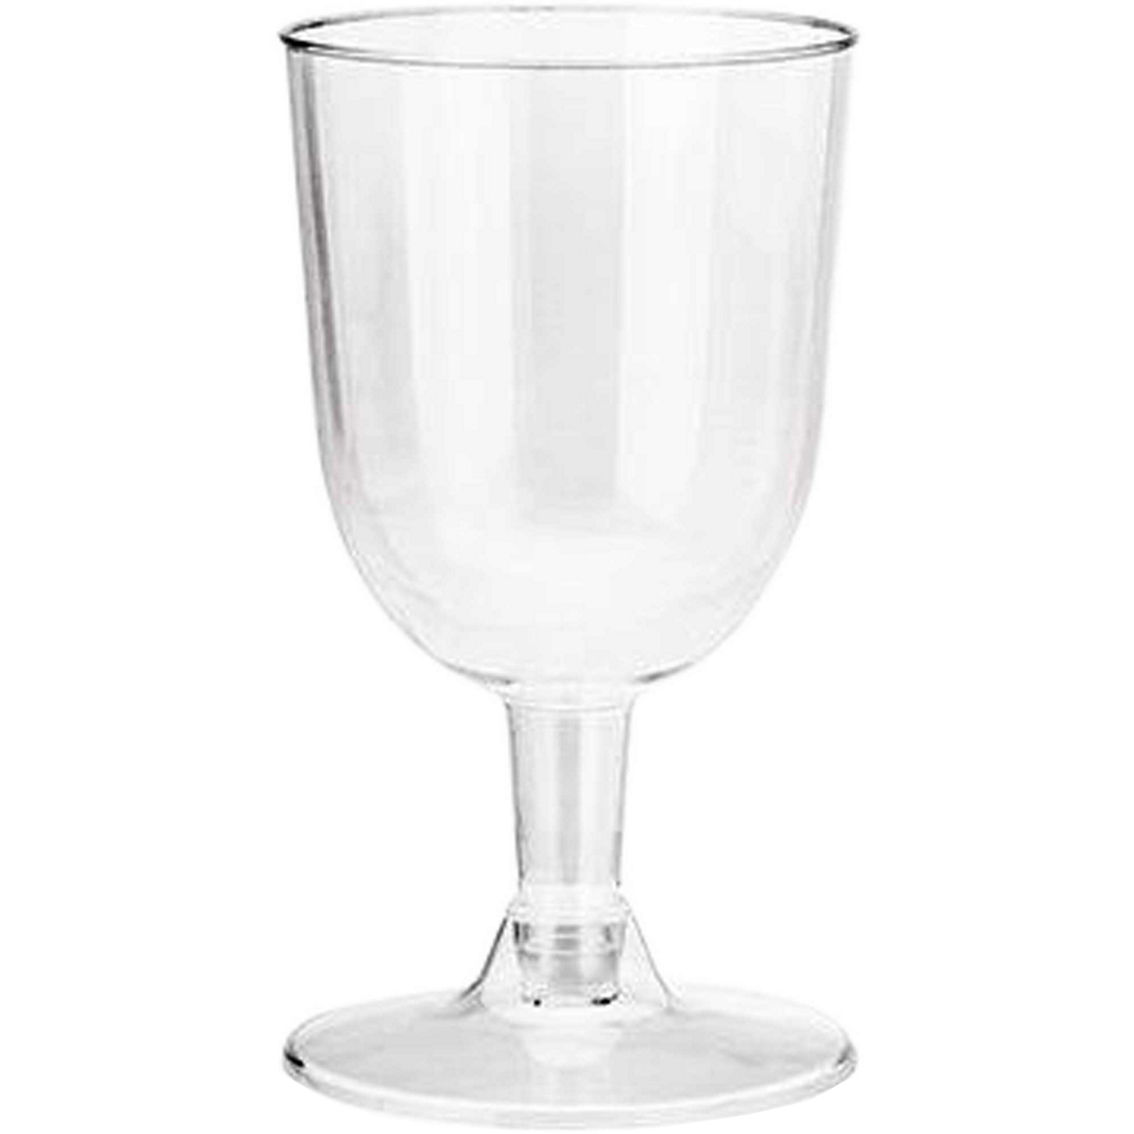 True Plastic Wine Glass Set of 8 - Image 2 of 2